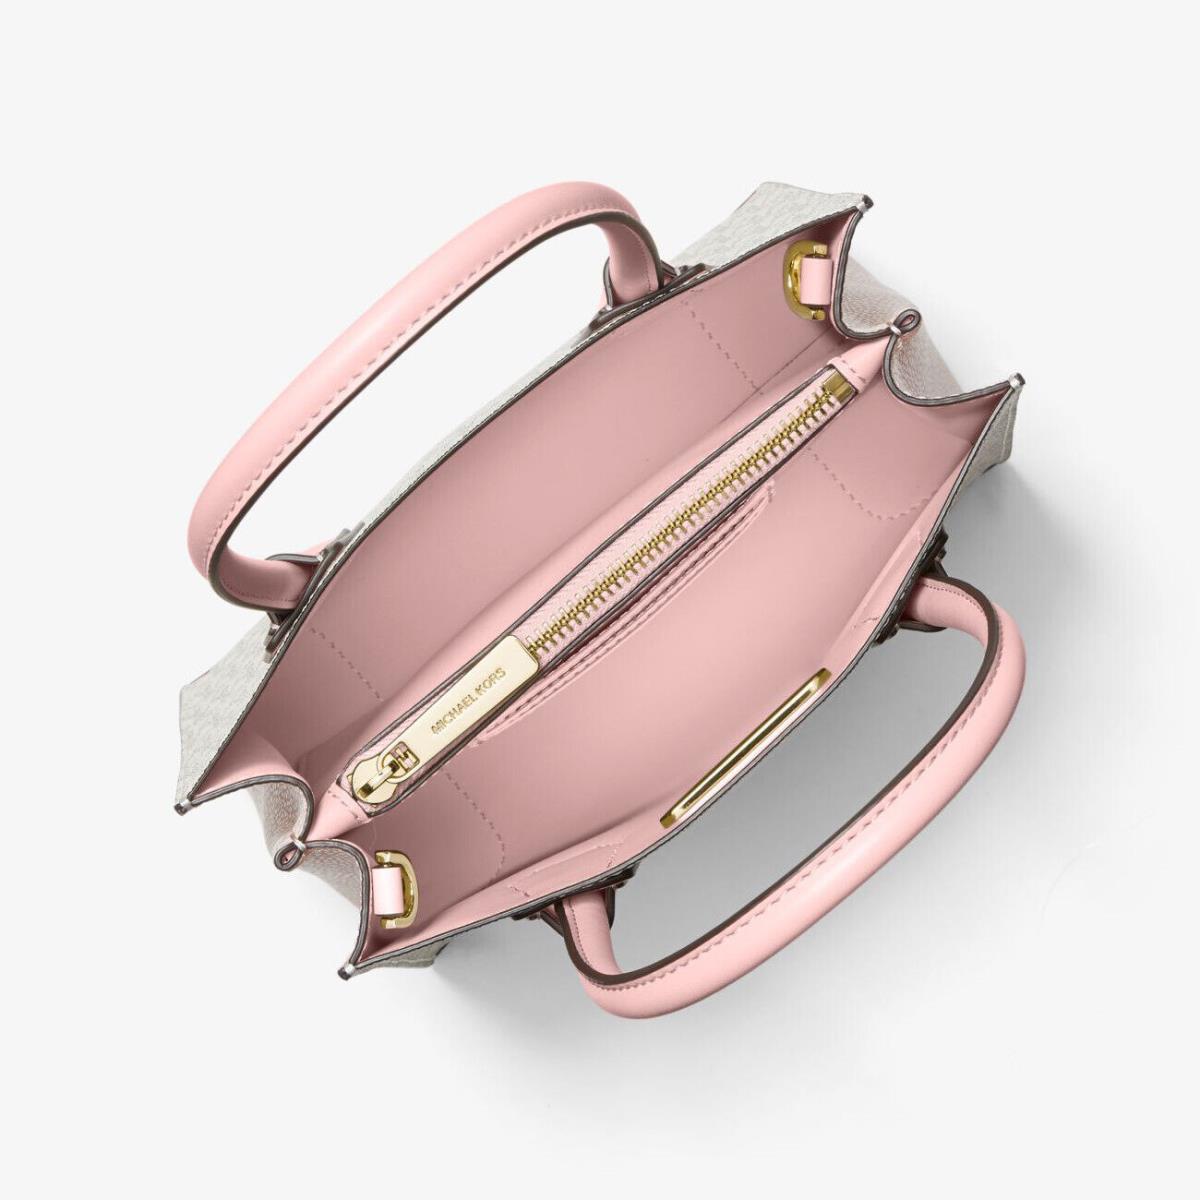 Michael Kors  bag  Mercer - Pink Handle/Strap, Gold Hardware, Vanilla Powder Blush Exterior 7